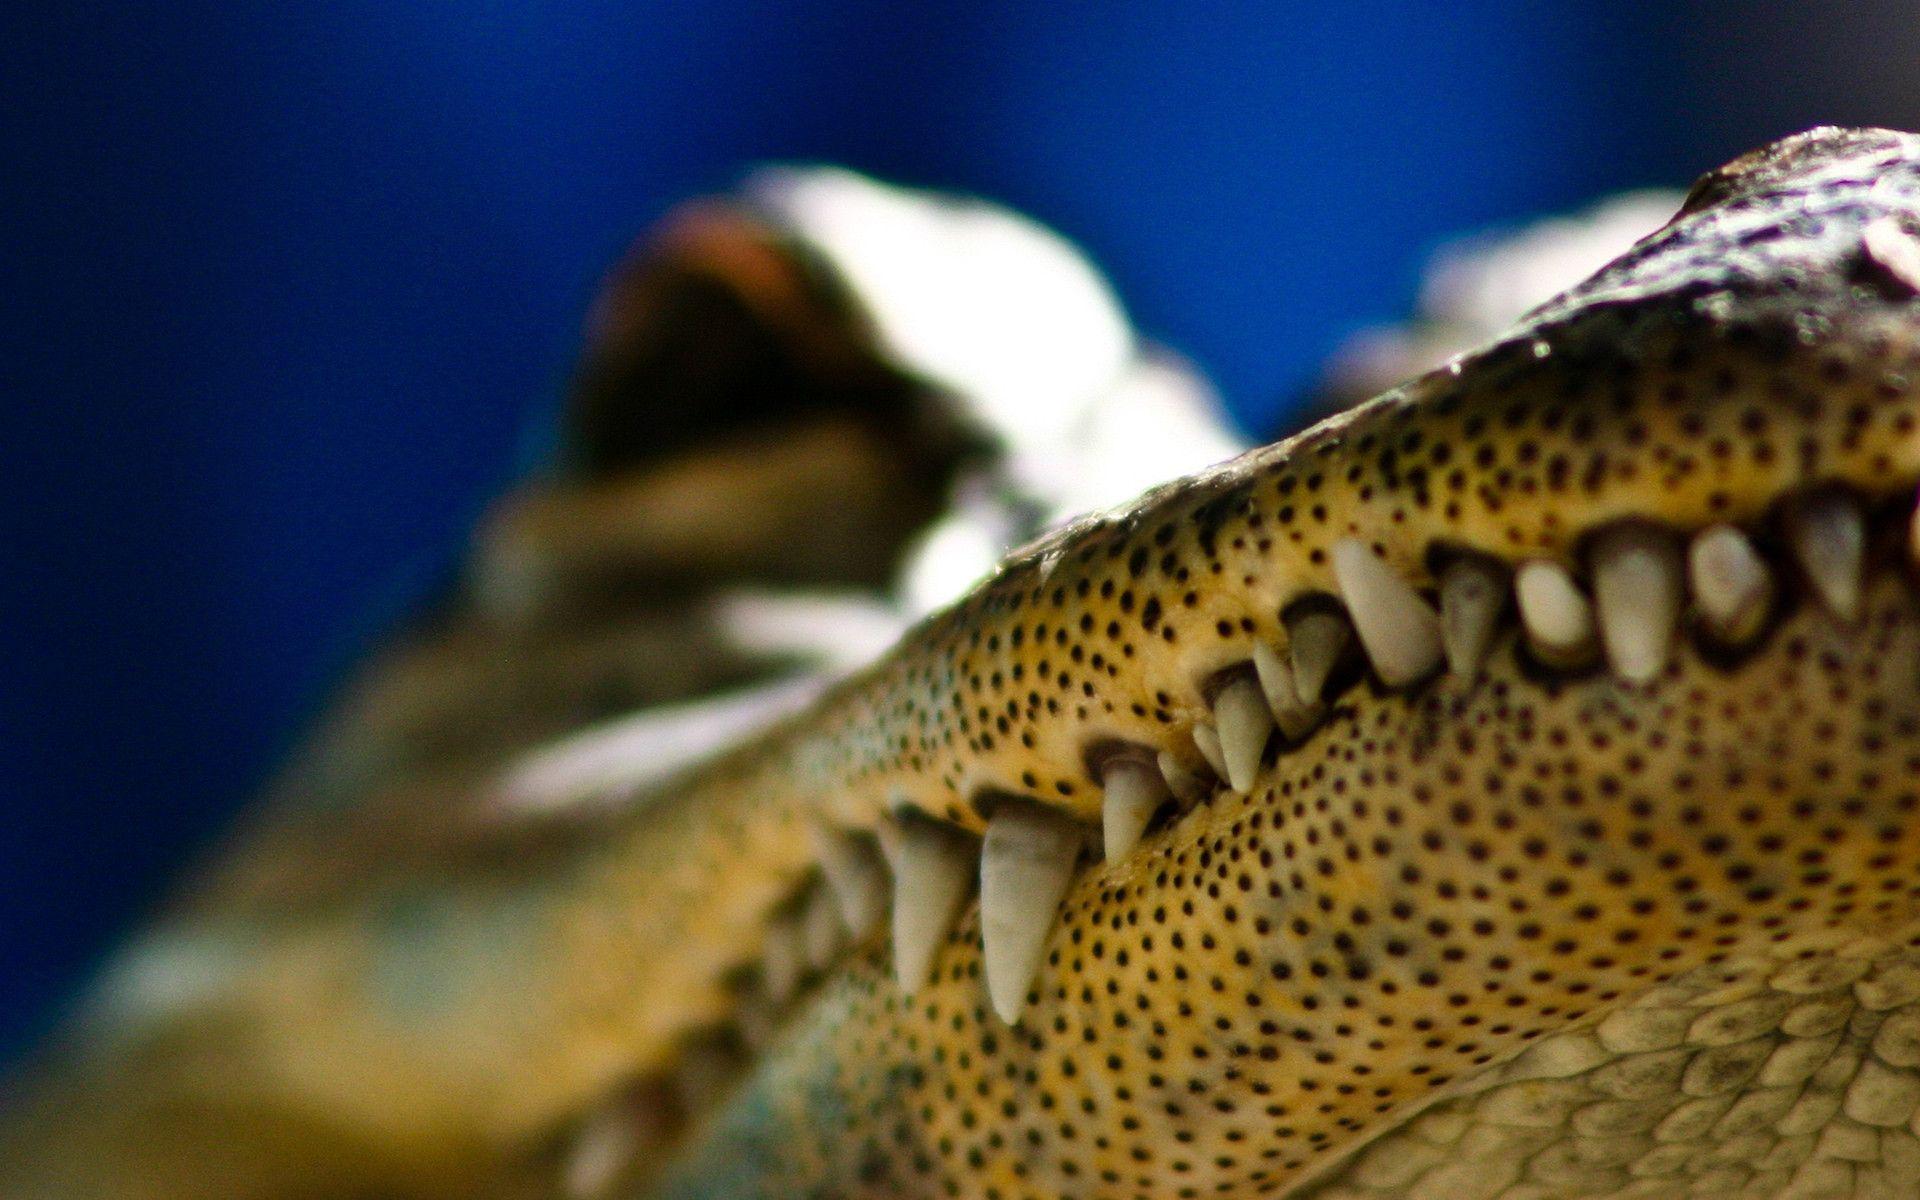 Reptile alligator wallpaper animals everglades wallpaper